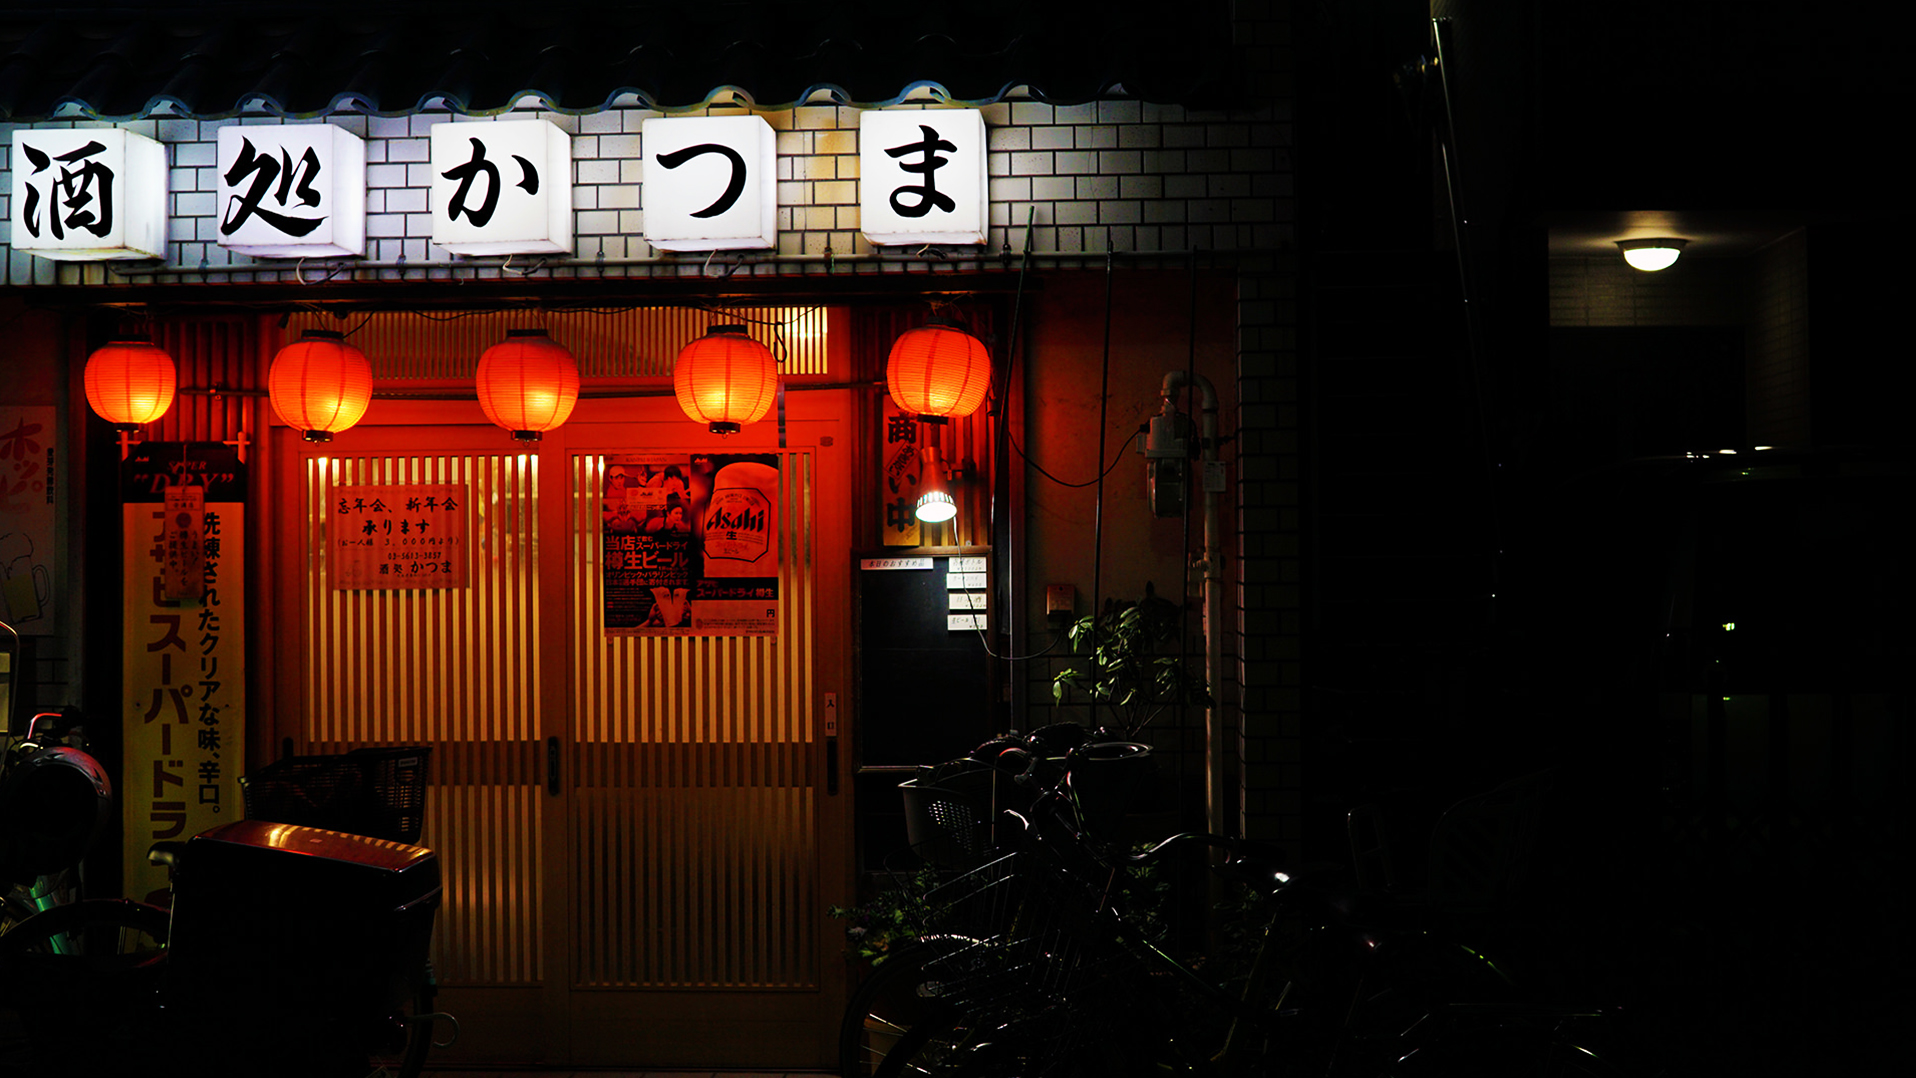 Landscape Restaurant Lights Night Signboard Lantern Japanese Japanese Characters 1916x1078